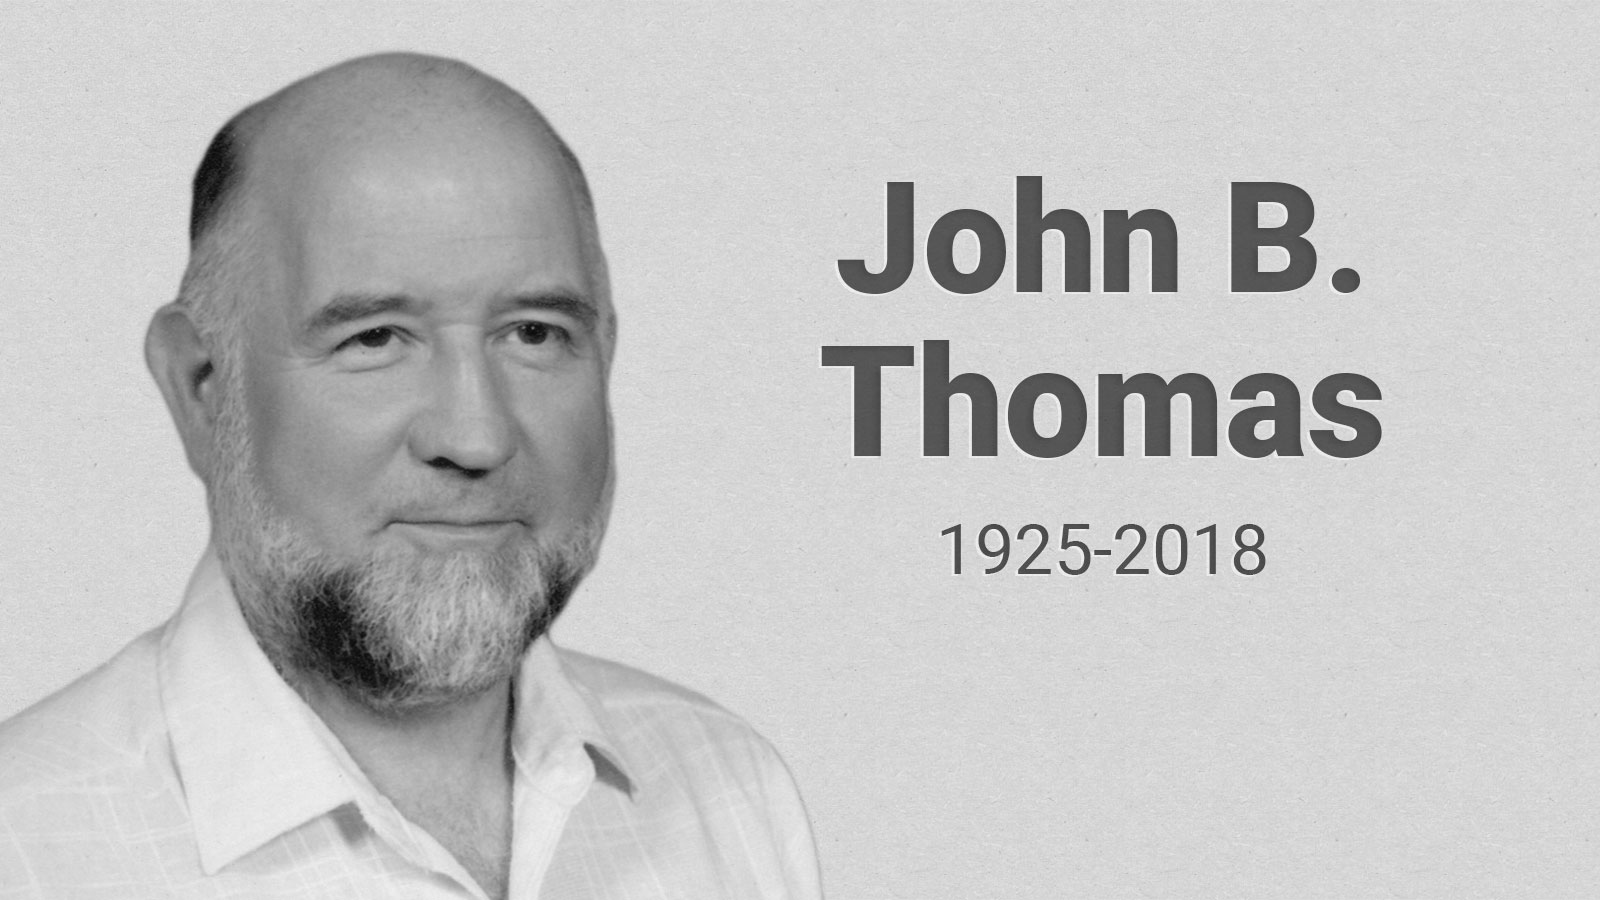 Portrait of John B. Thomas with text "John B. Thomas 1925-2018"